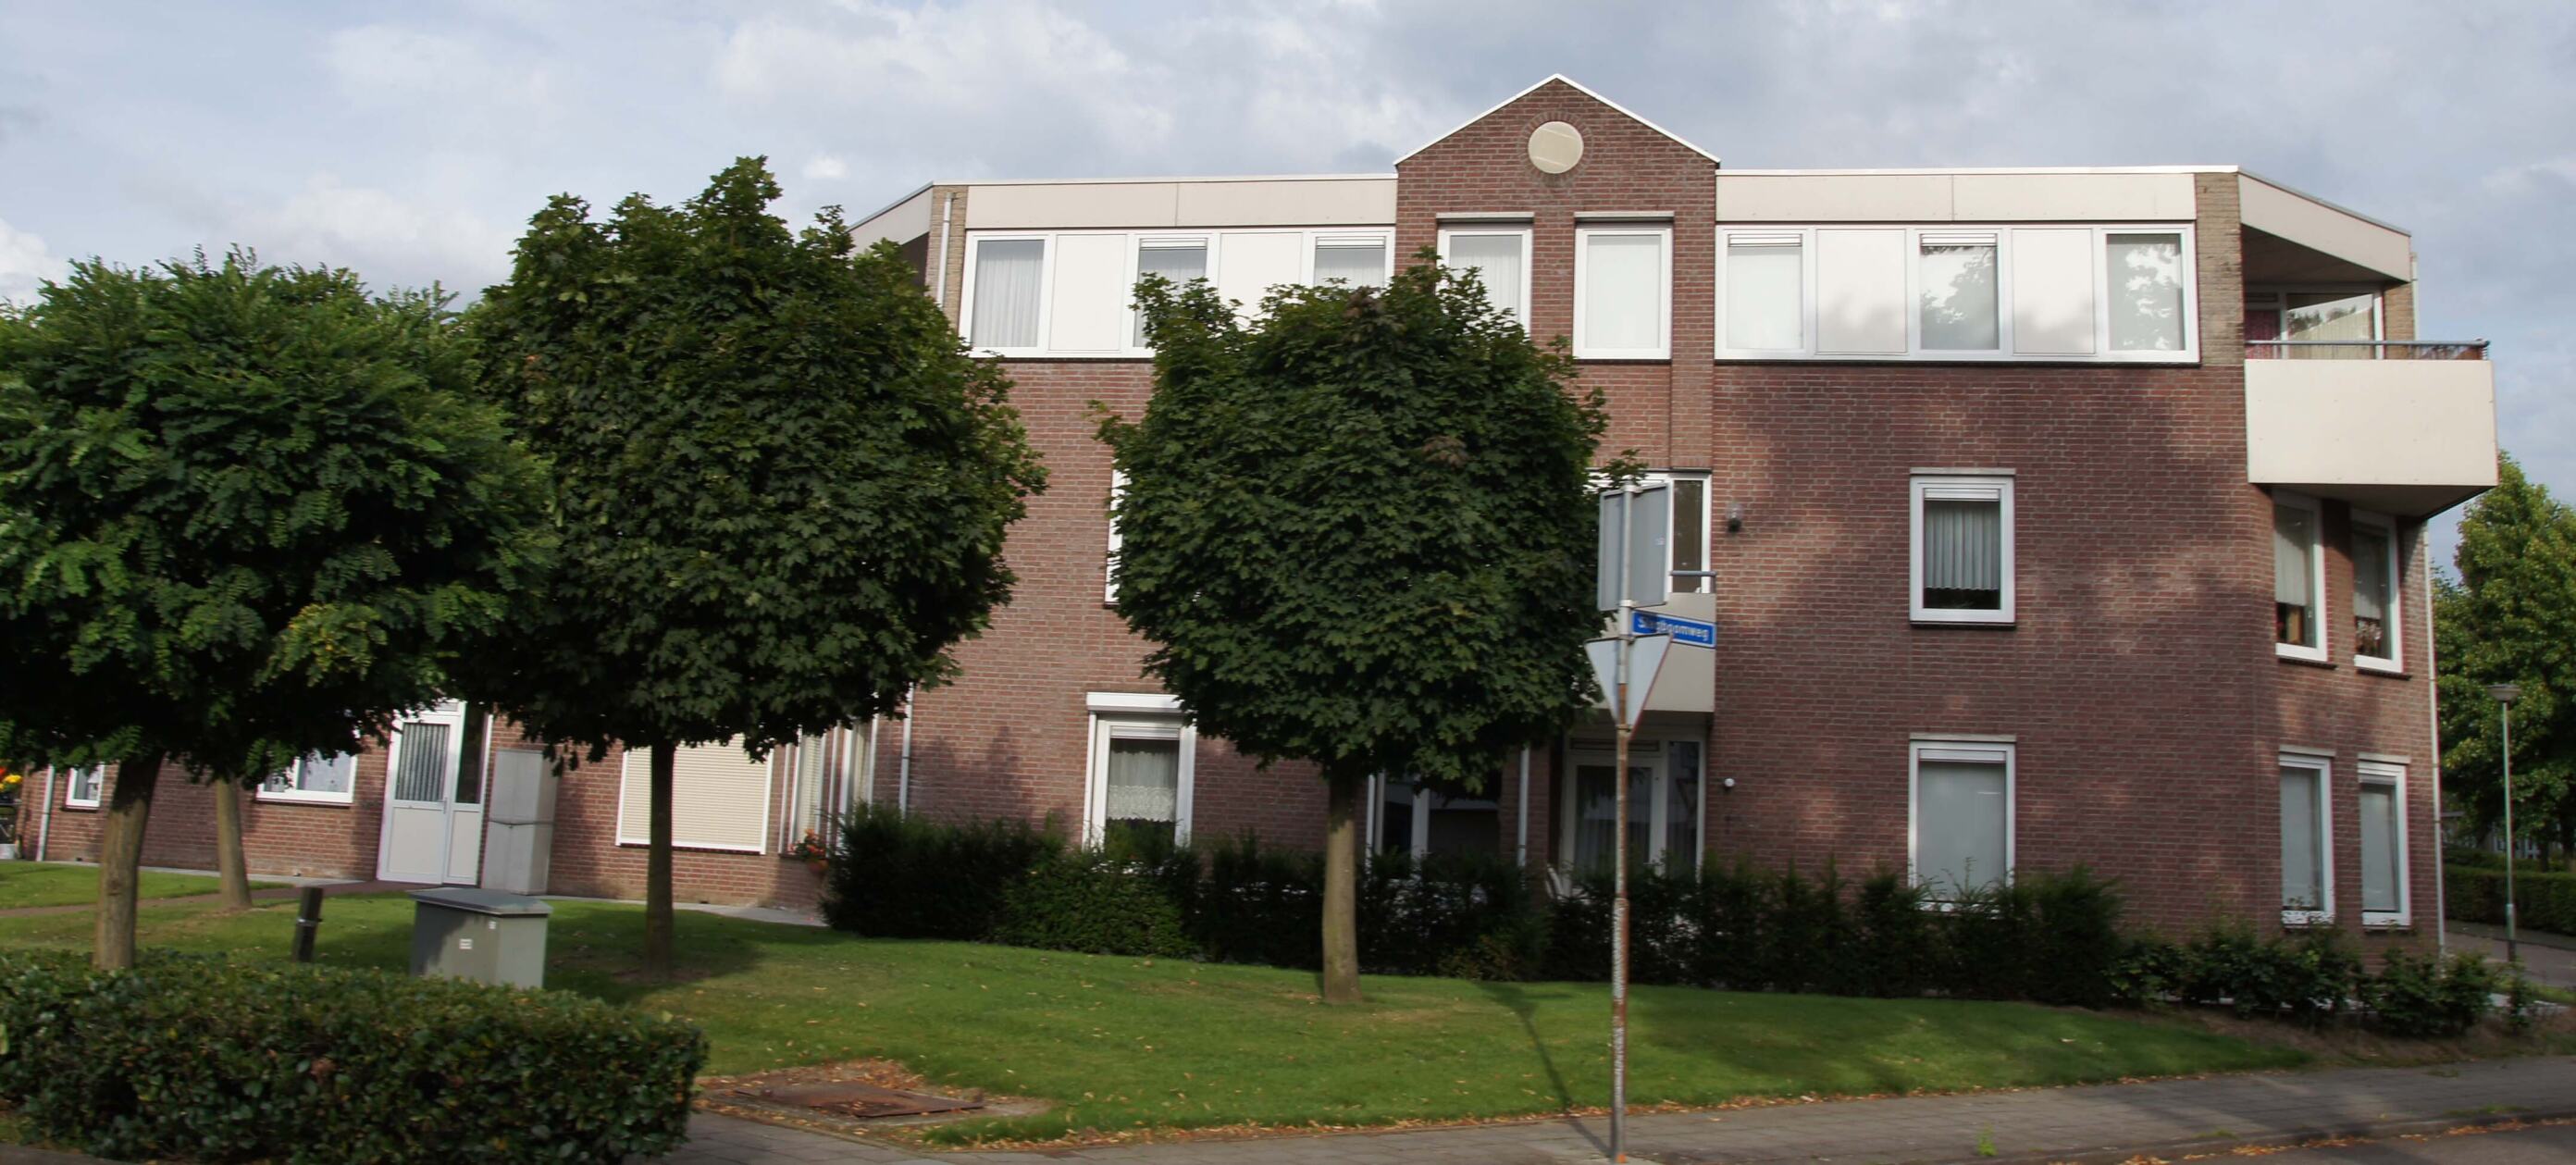 Sint Antoniusplein 11, 6129 EV Urmond, Nederland